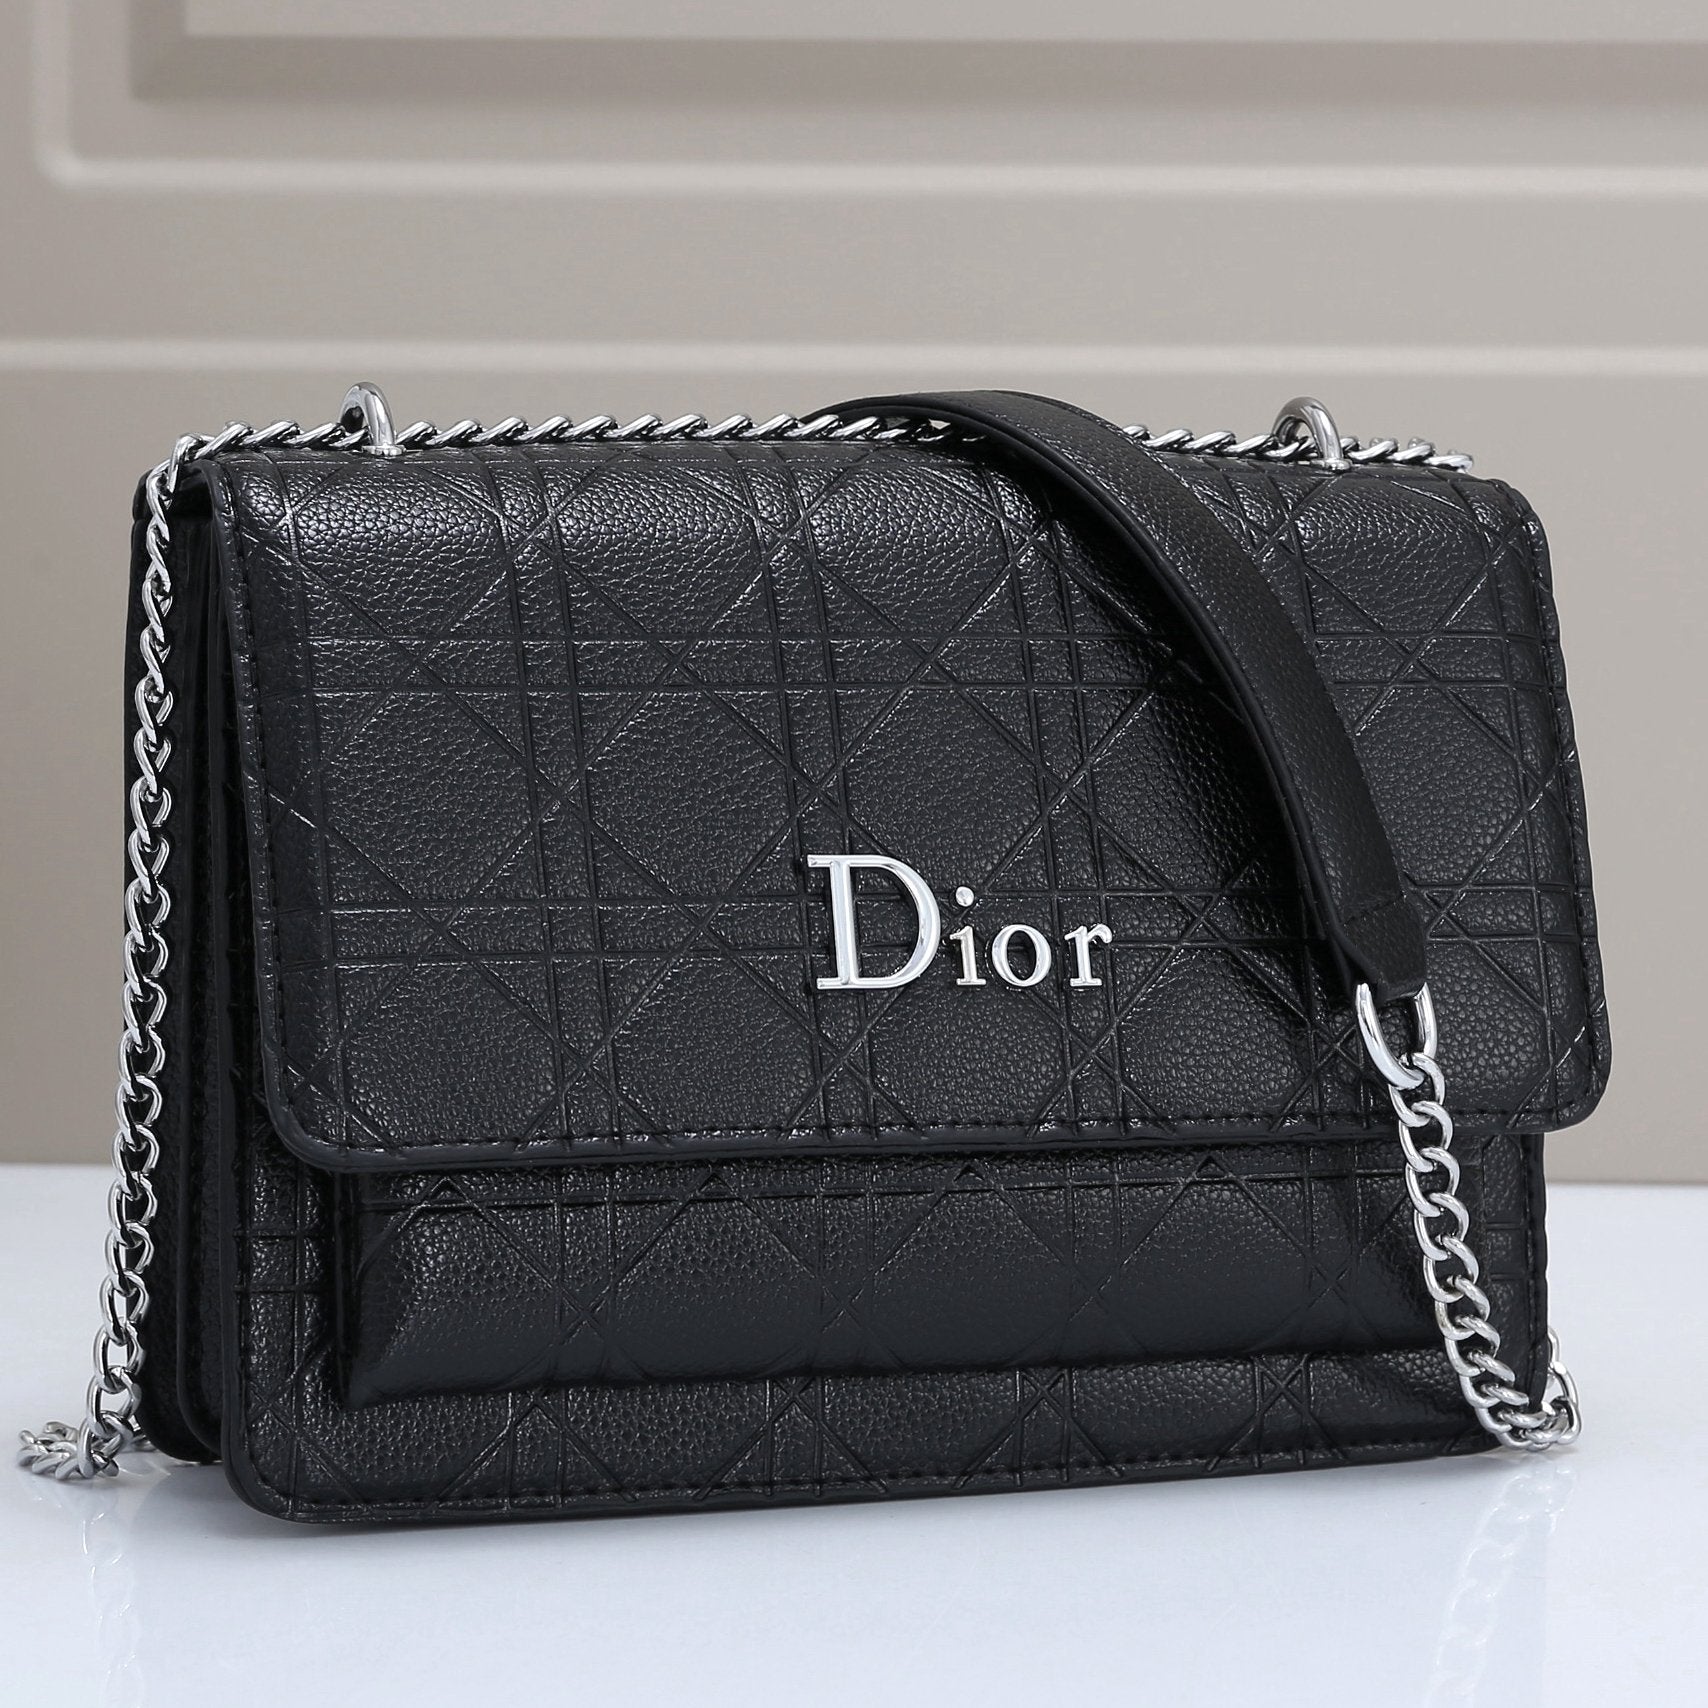 Dior Fashion Leather Crossbody Satchel Shoulder Bag